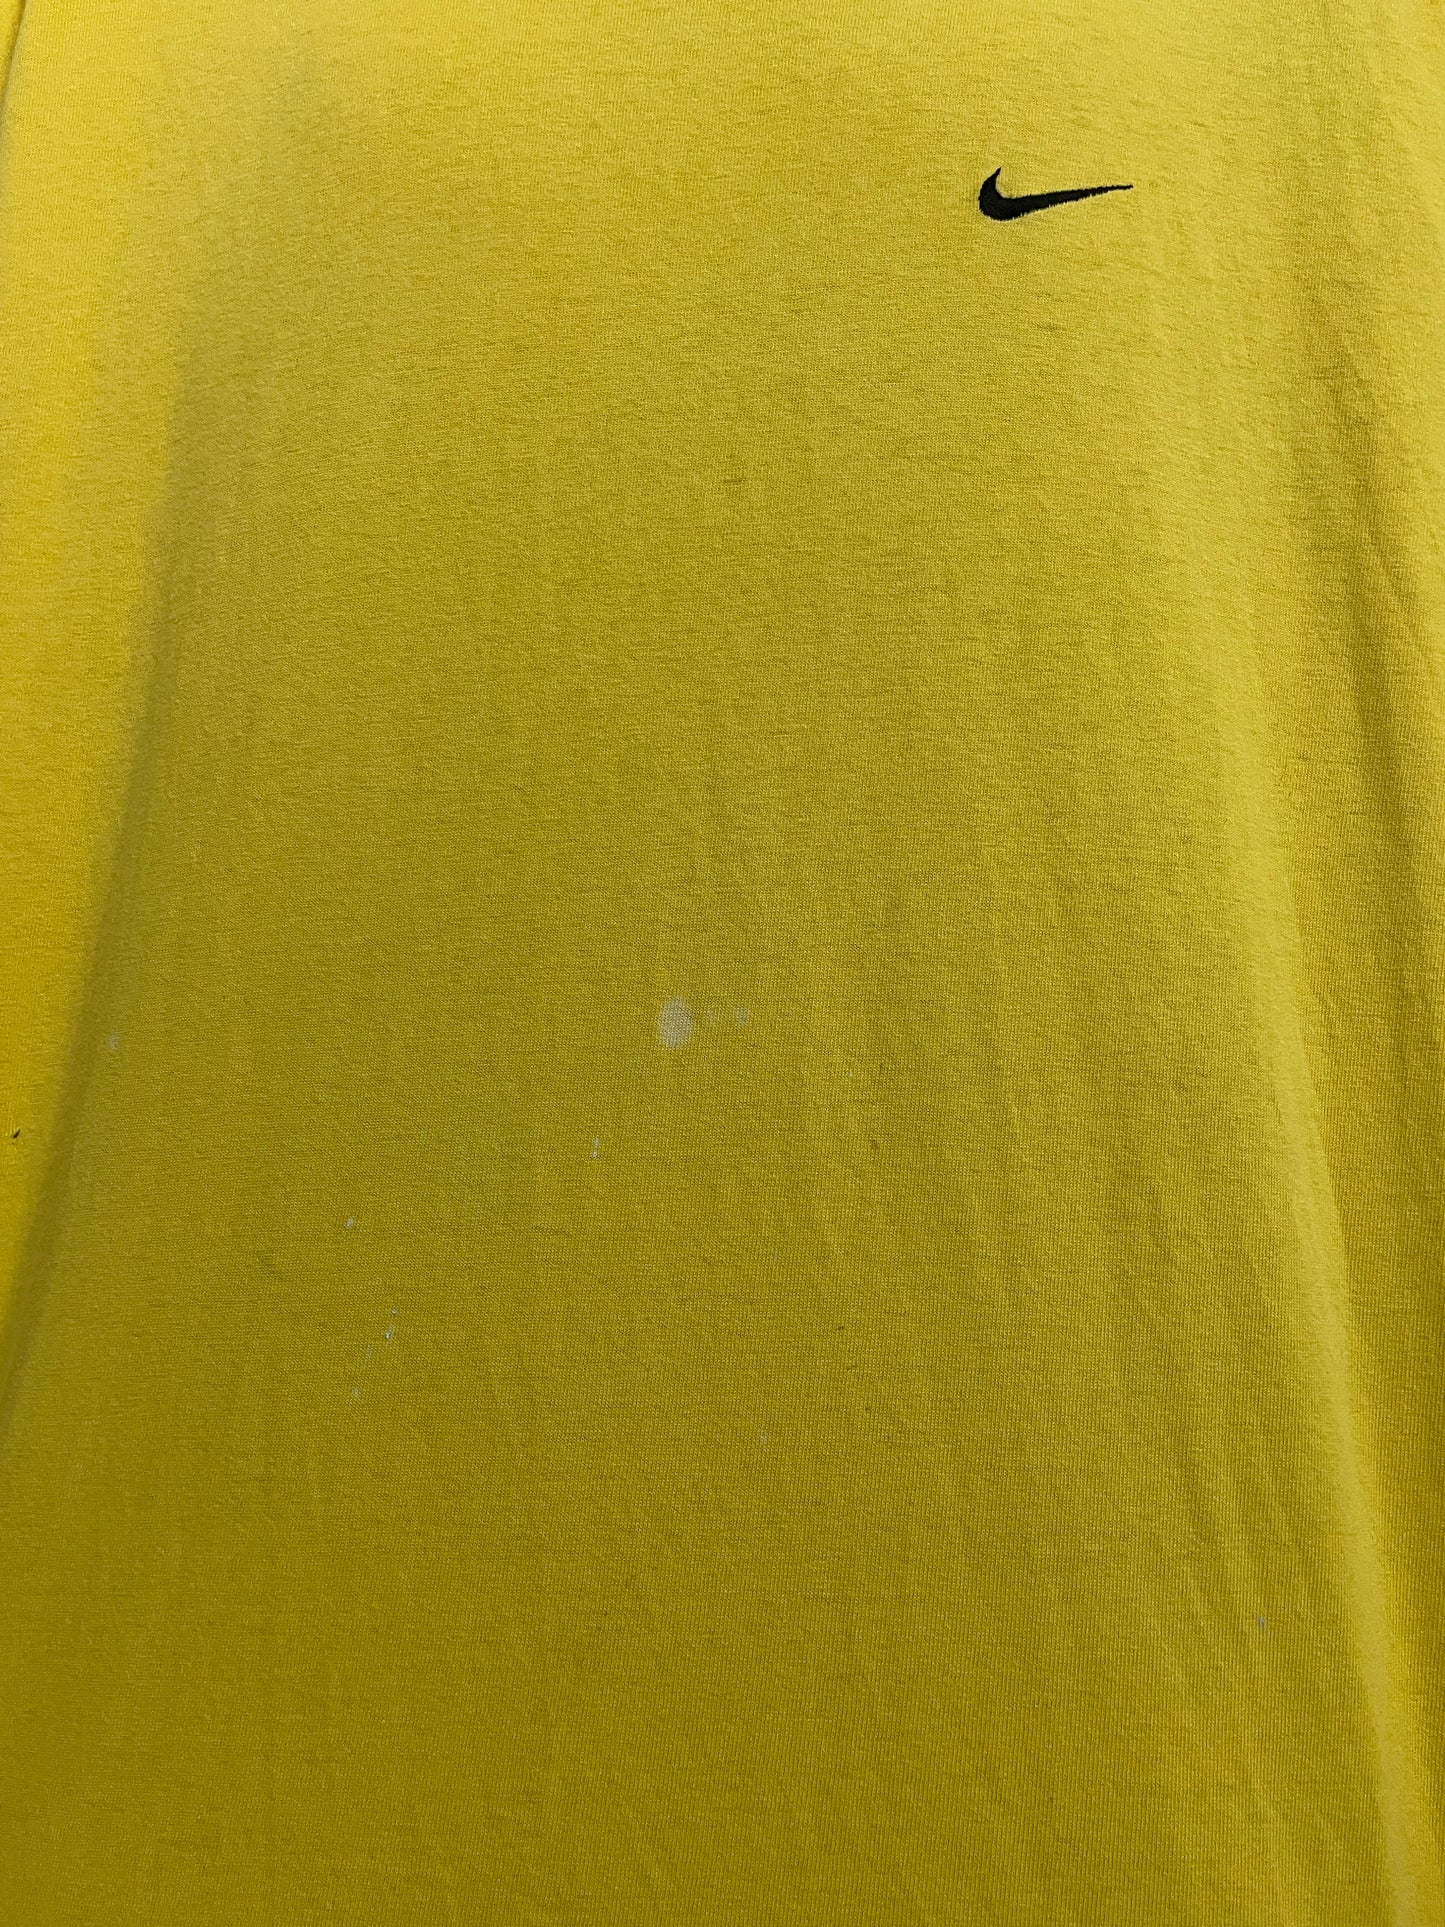 90s Nike Side Swoosh (XL) 1 dot stain